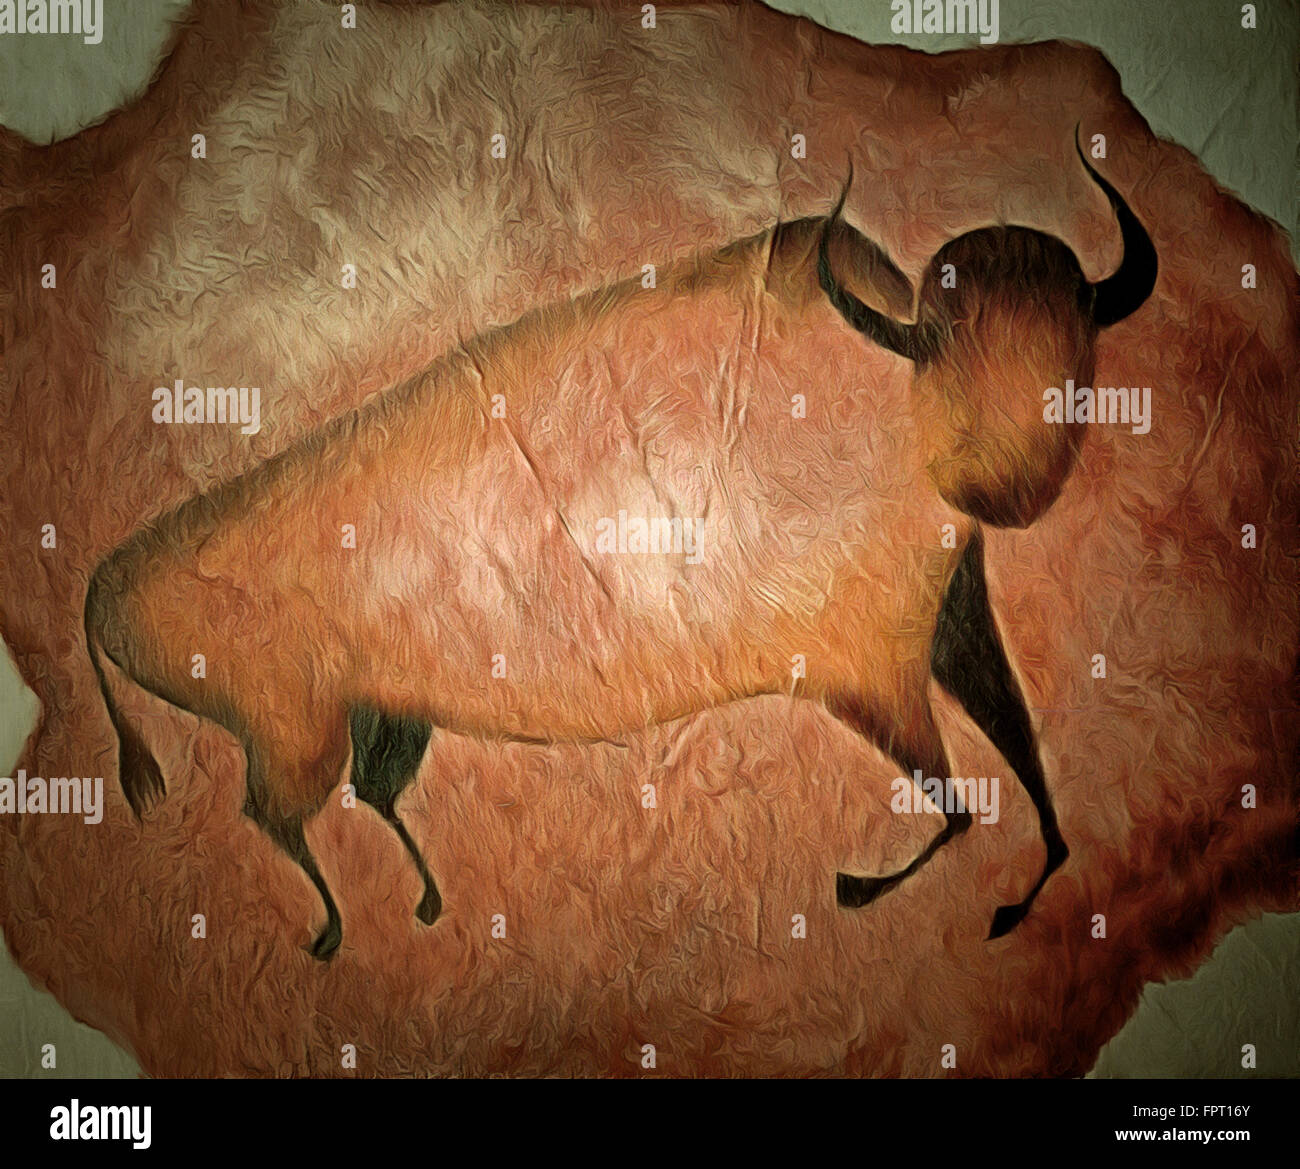 Bull like cave painting - primitive art Stock Photo